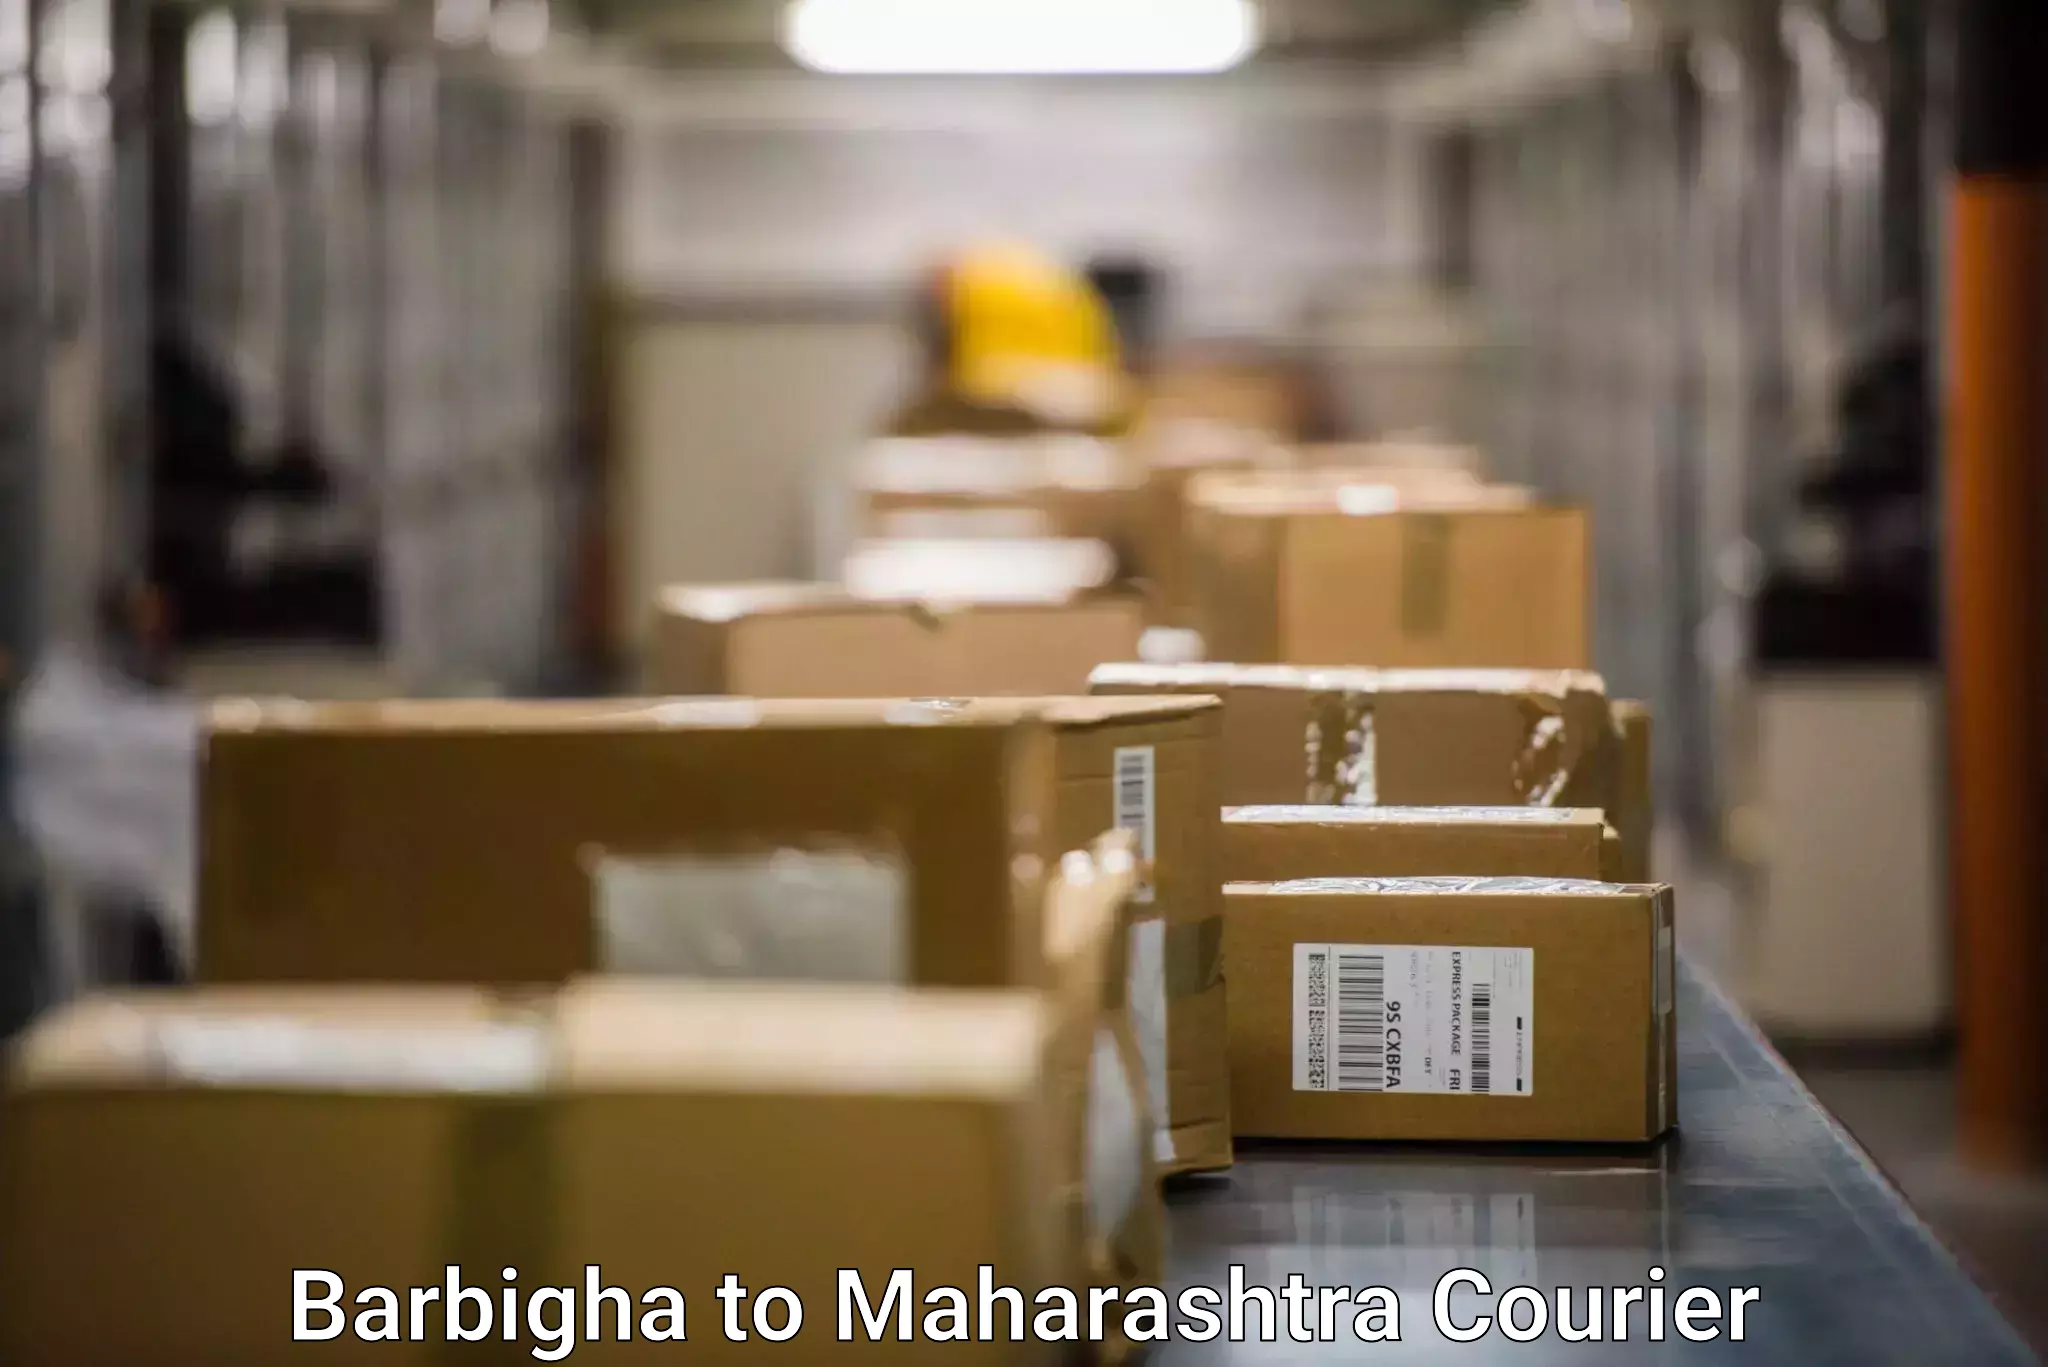 Courier service comparison Barbigha to Wani